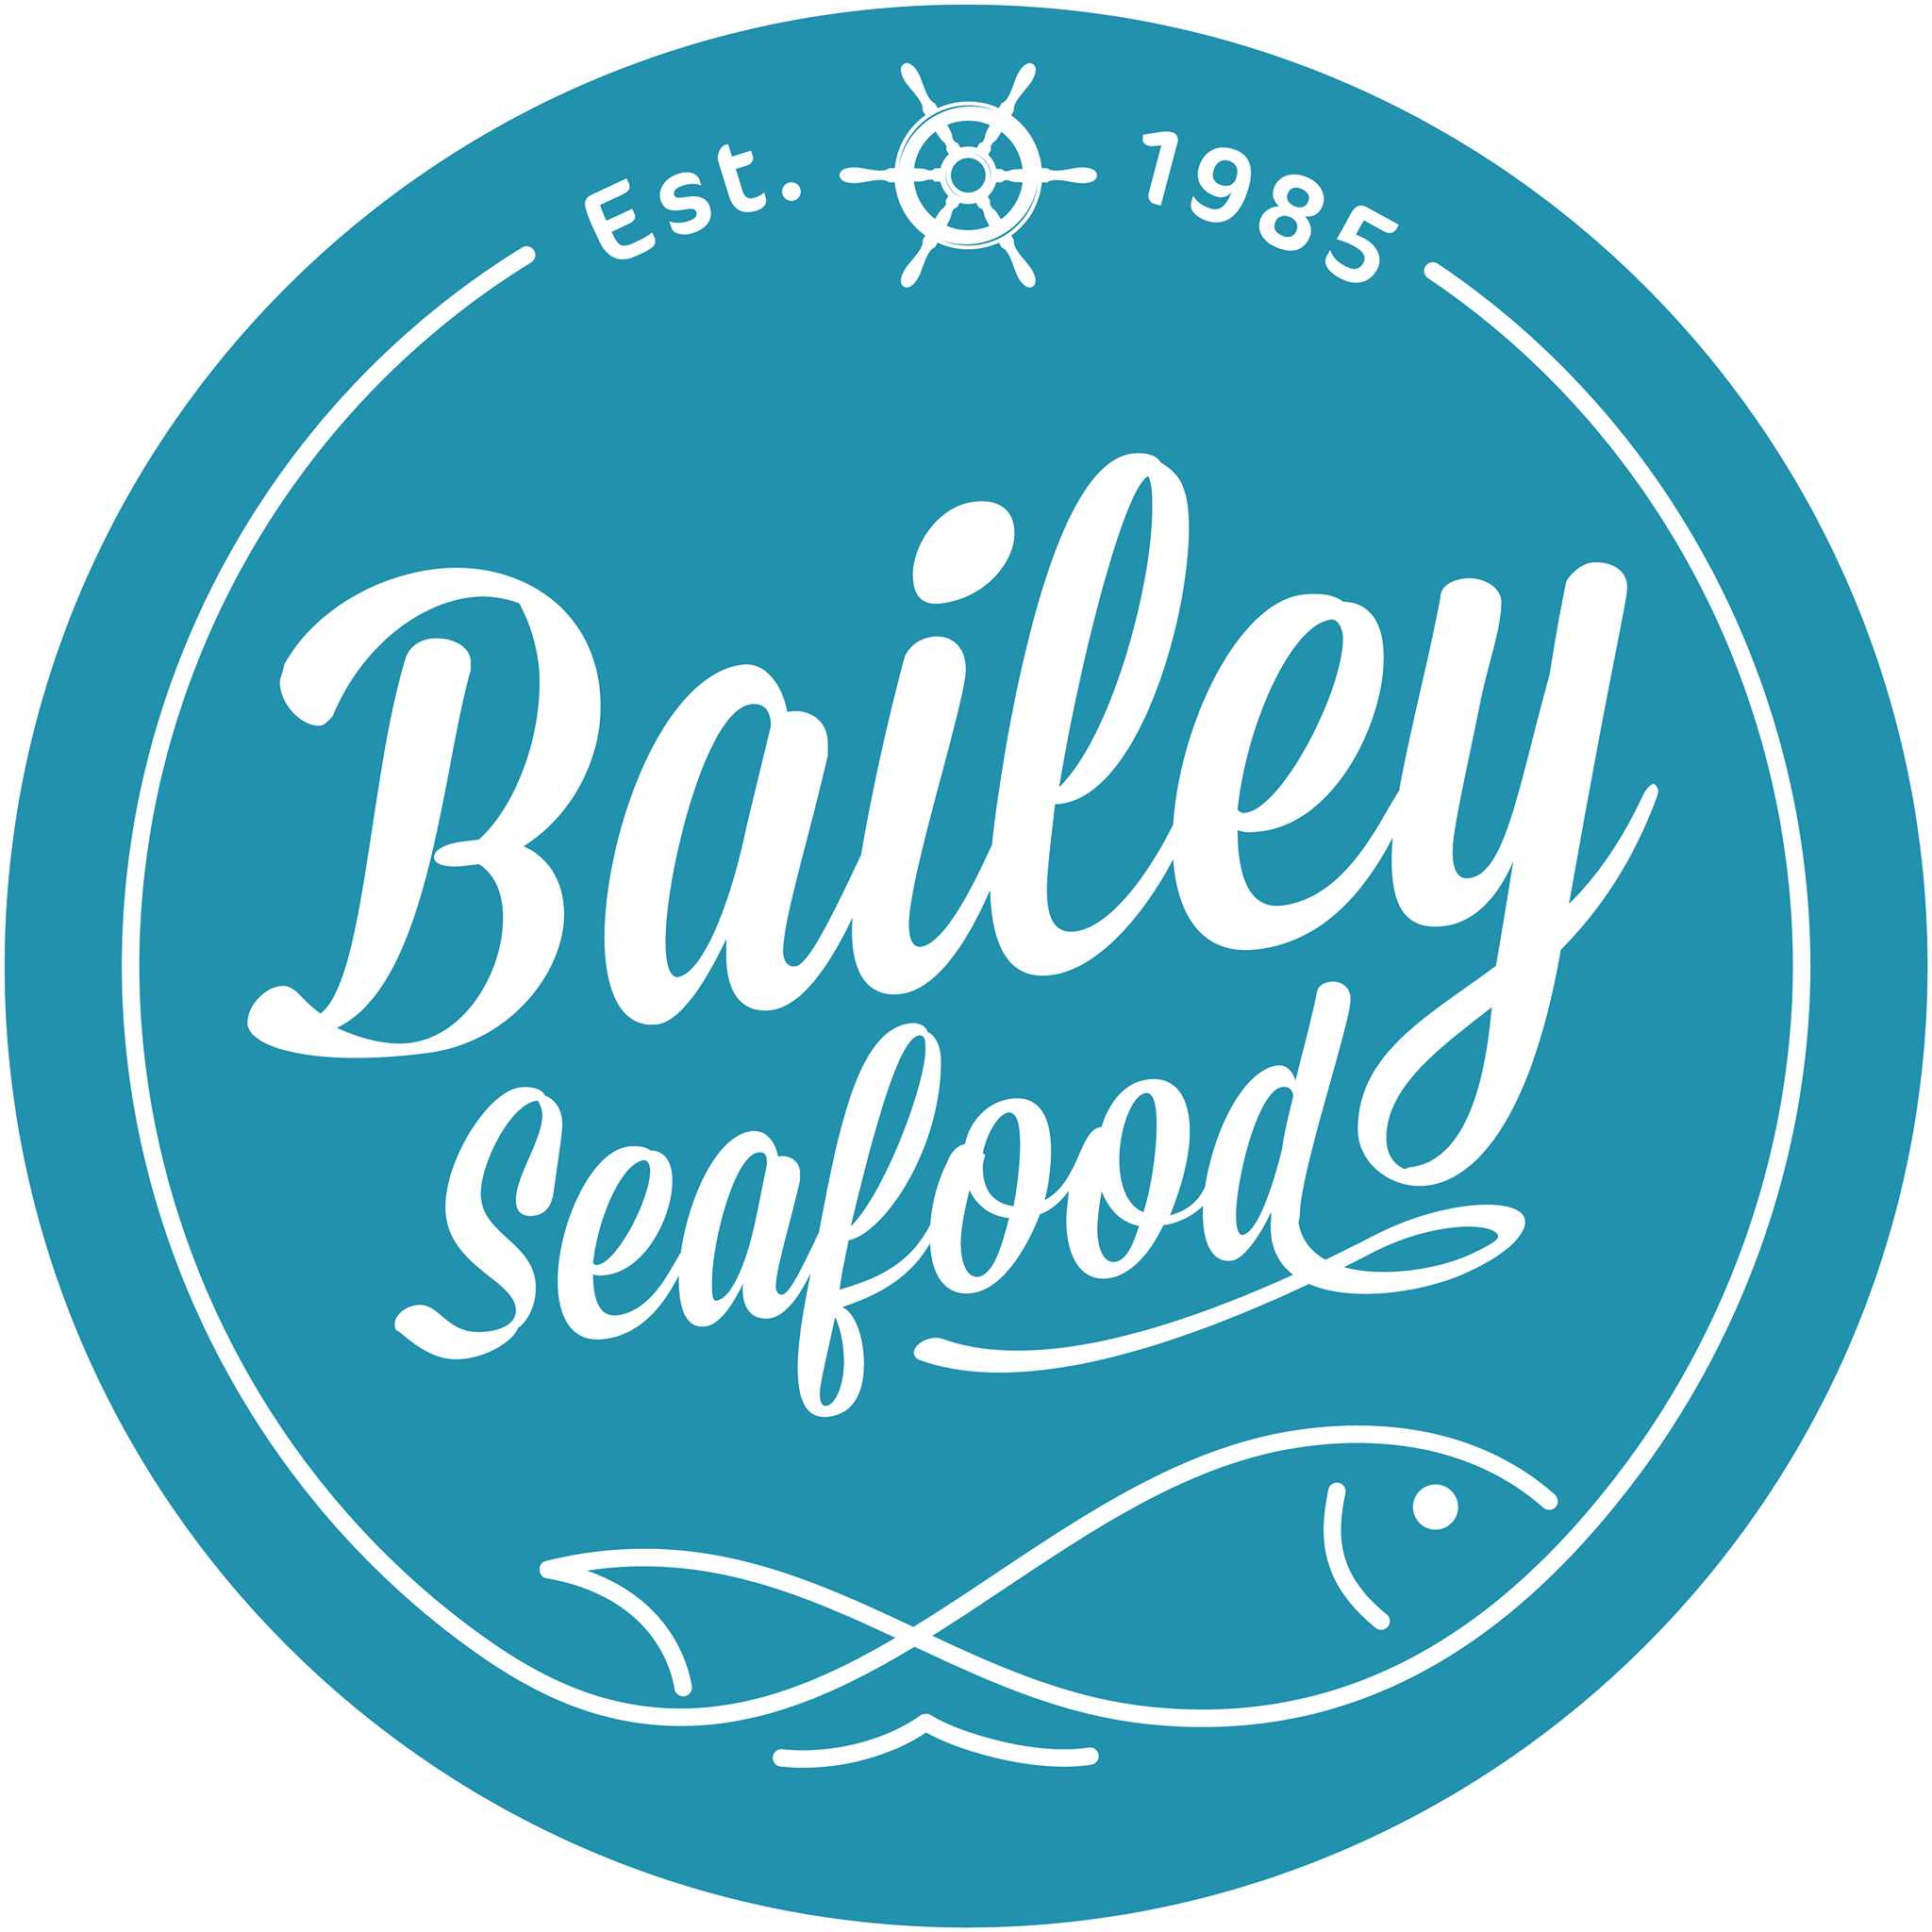 Bailey Seafood